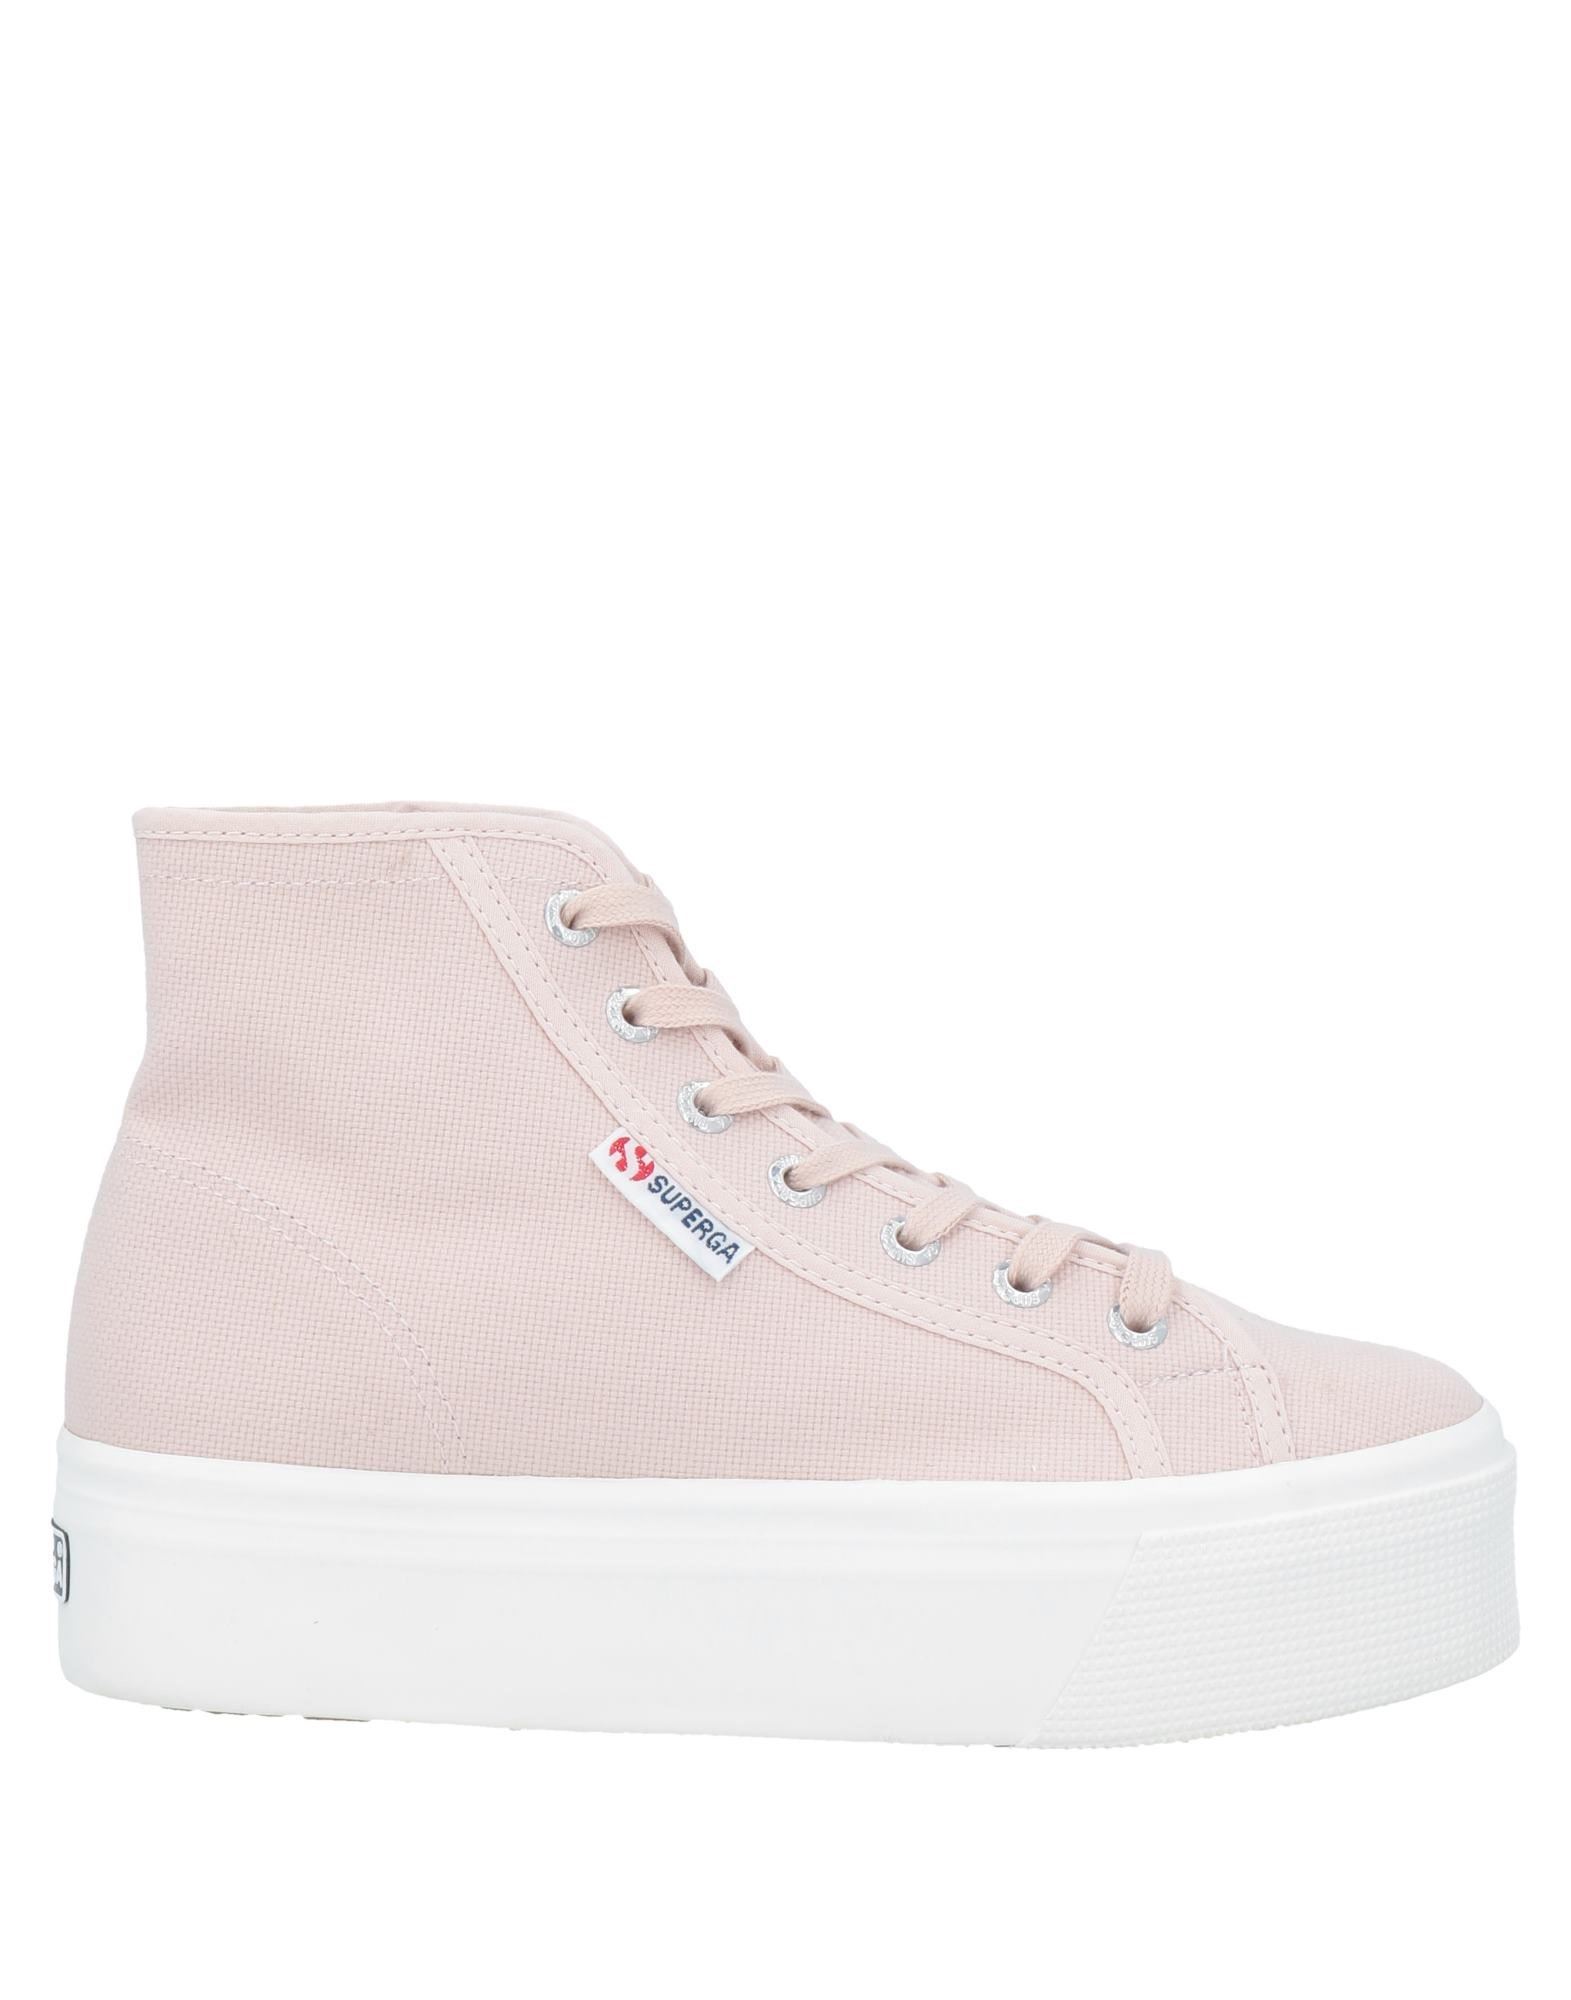 Superga Sneakers In Light Pink | ModeSens